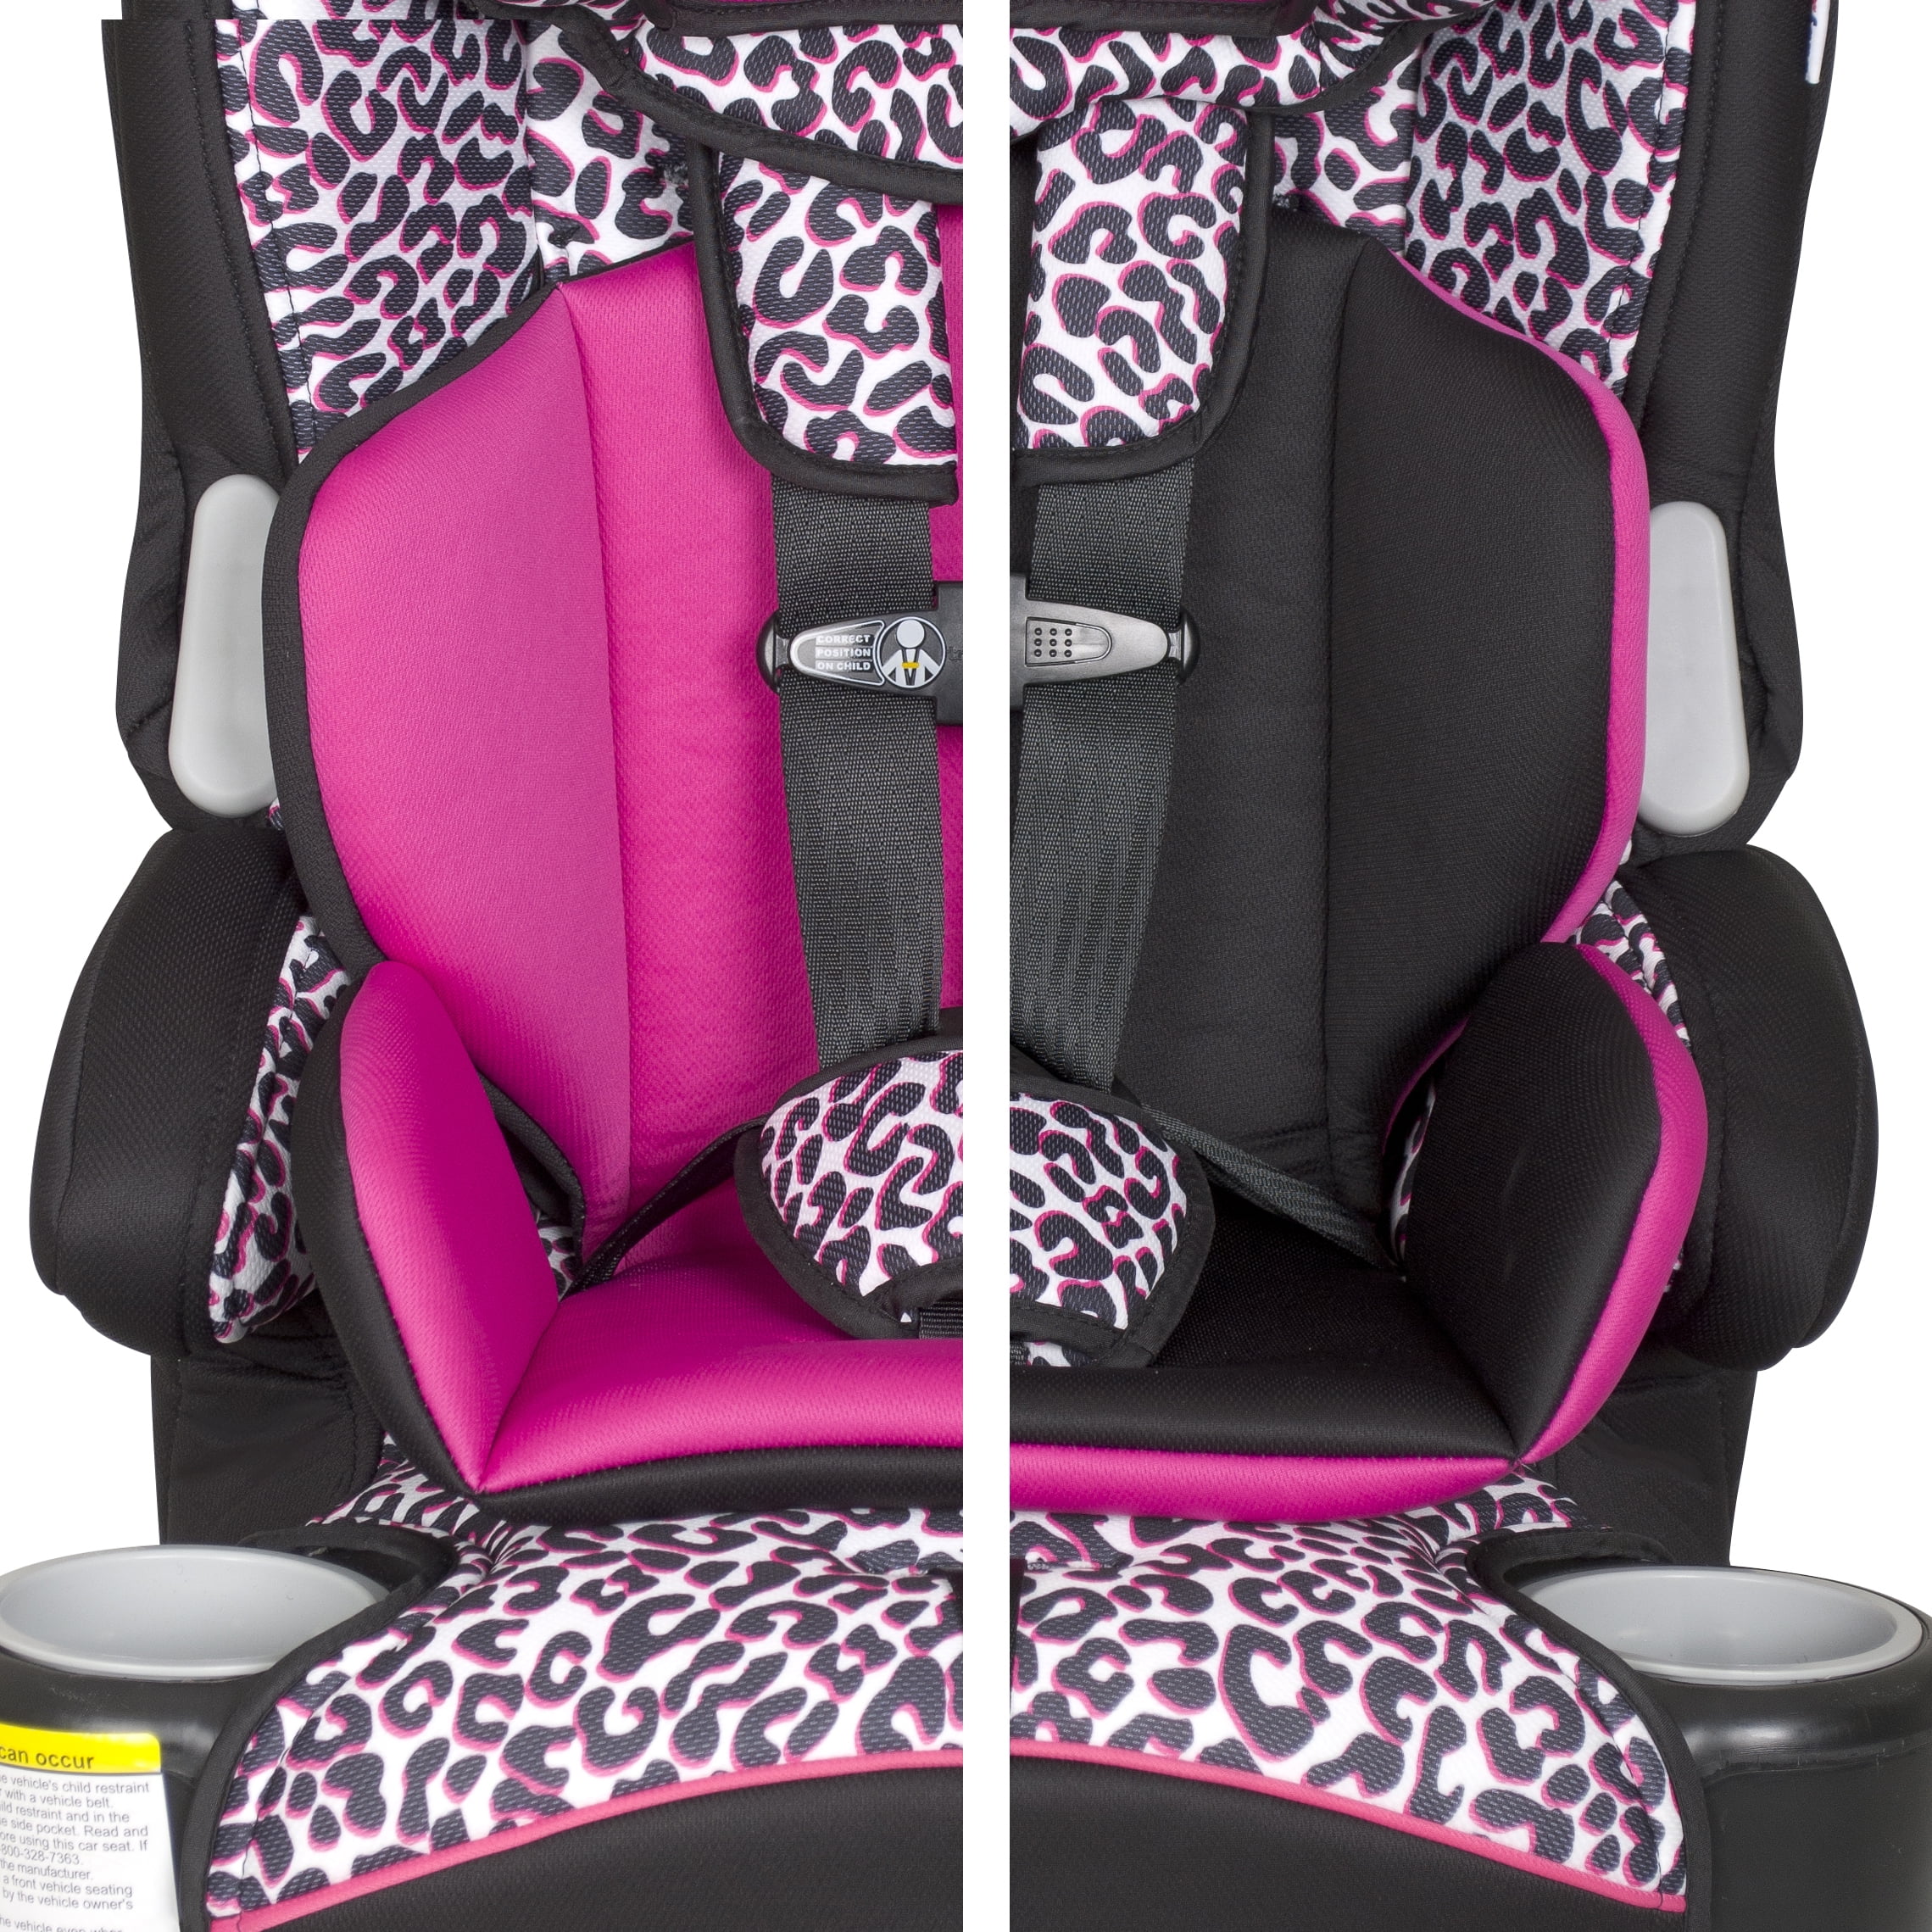 Hybrid™ 3-in-1 Combination Booster Car Seat - Desert Pink (Walmart  Exclusive)